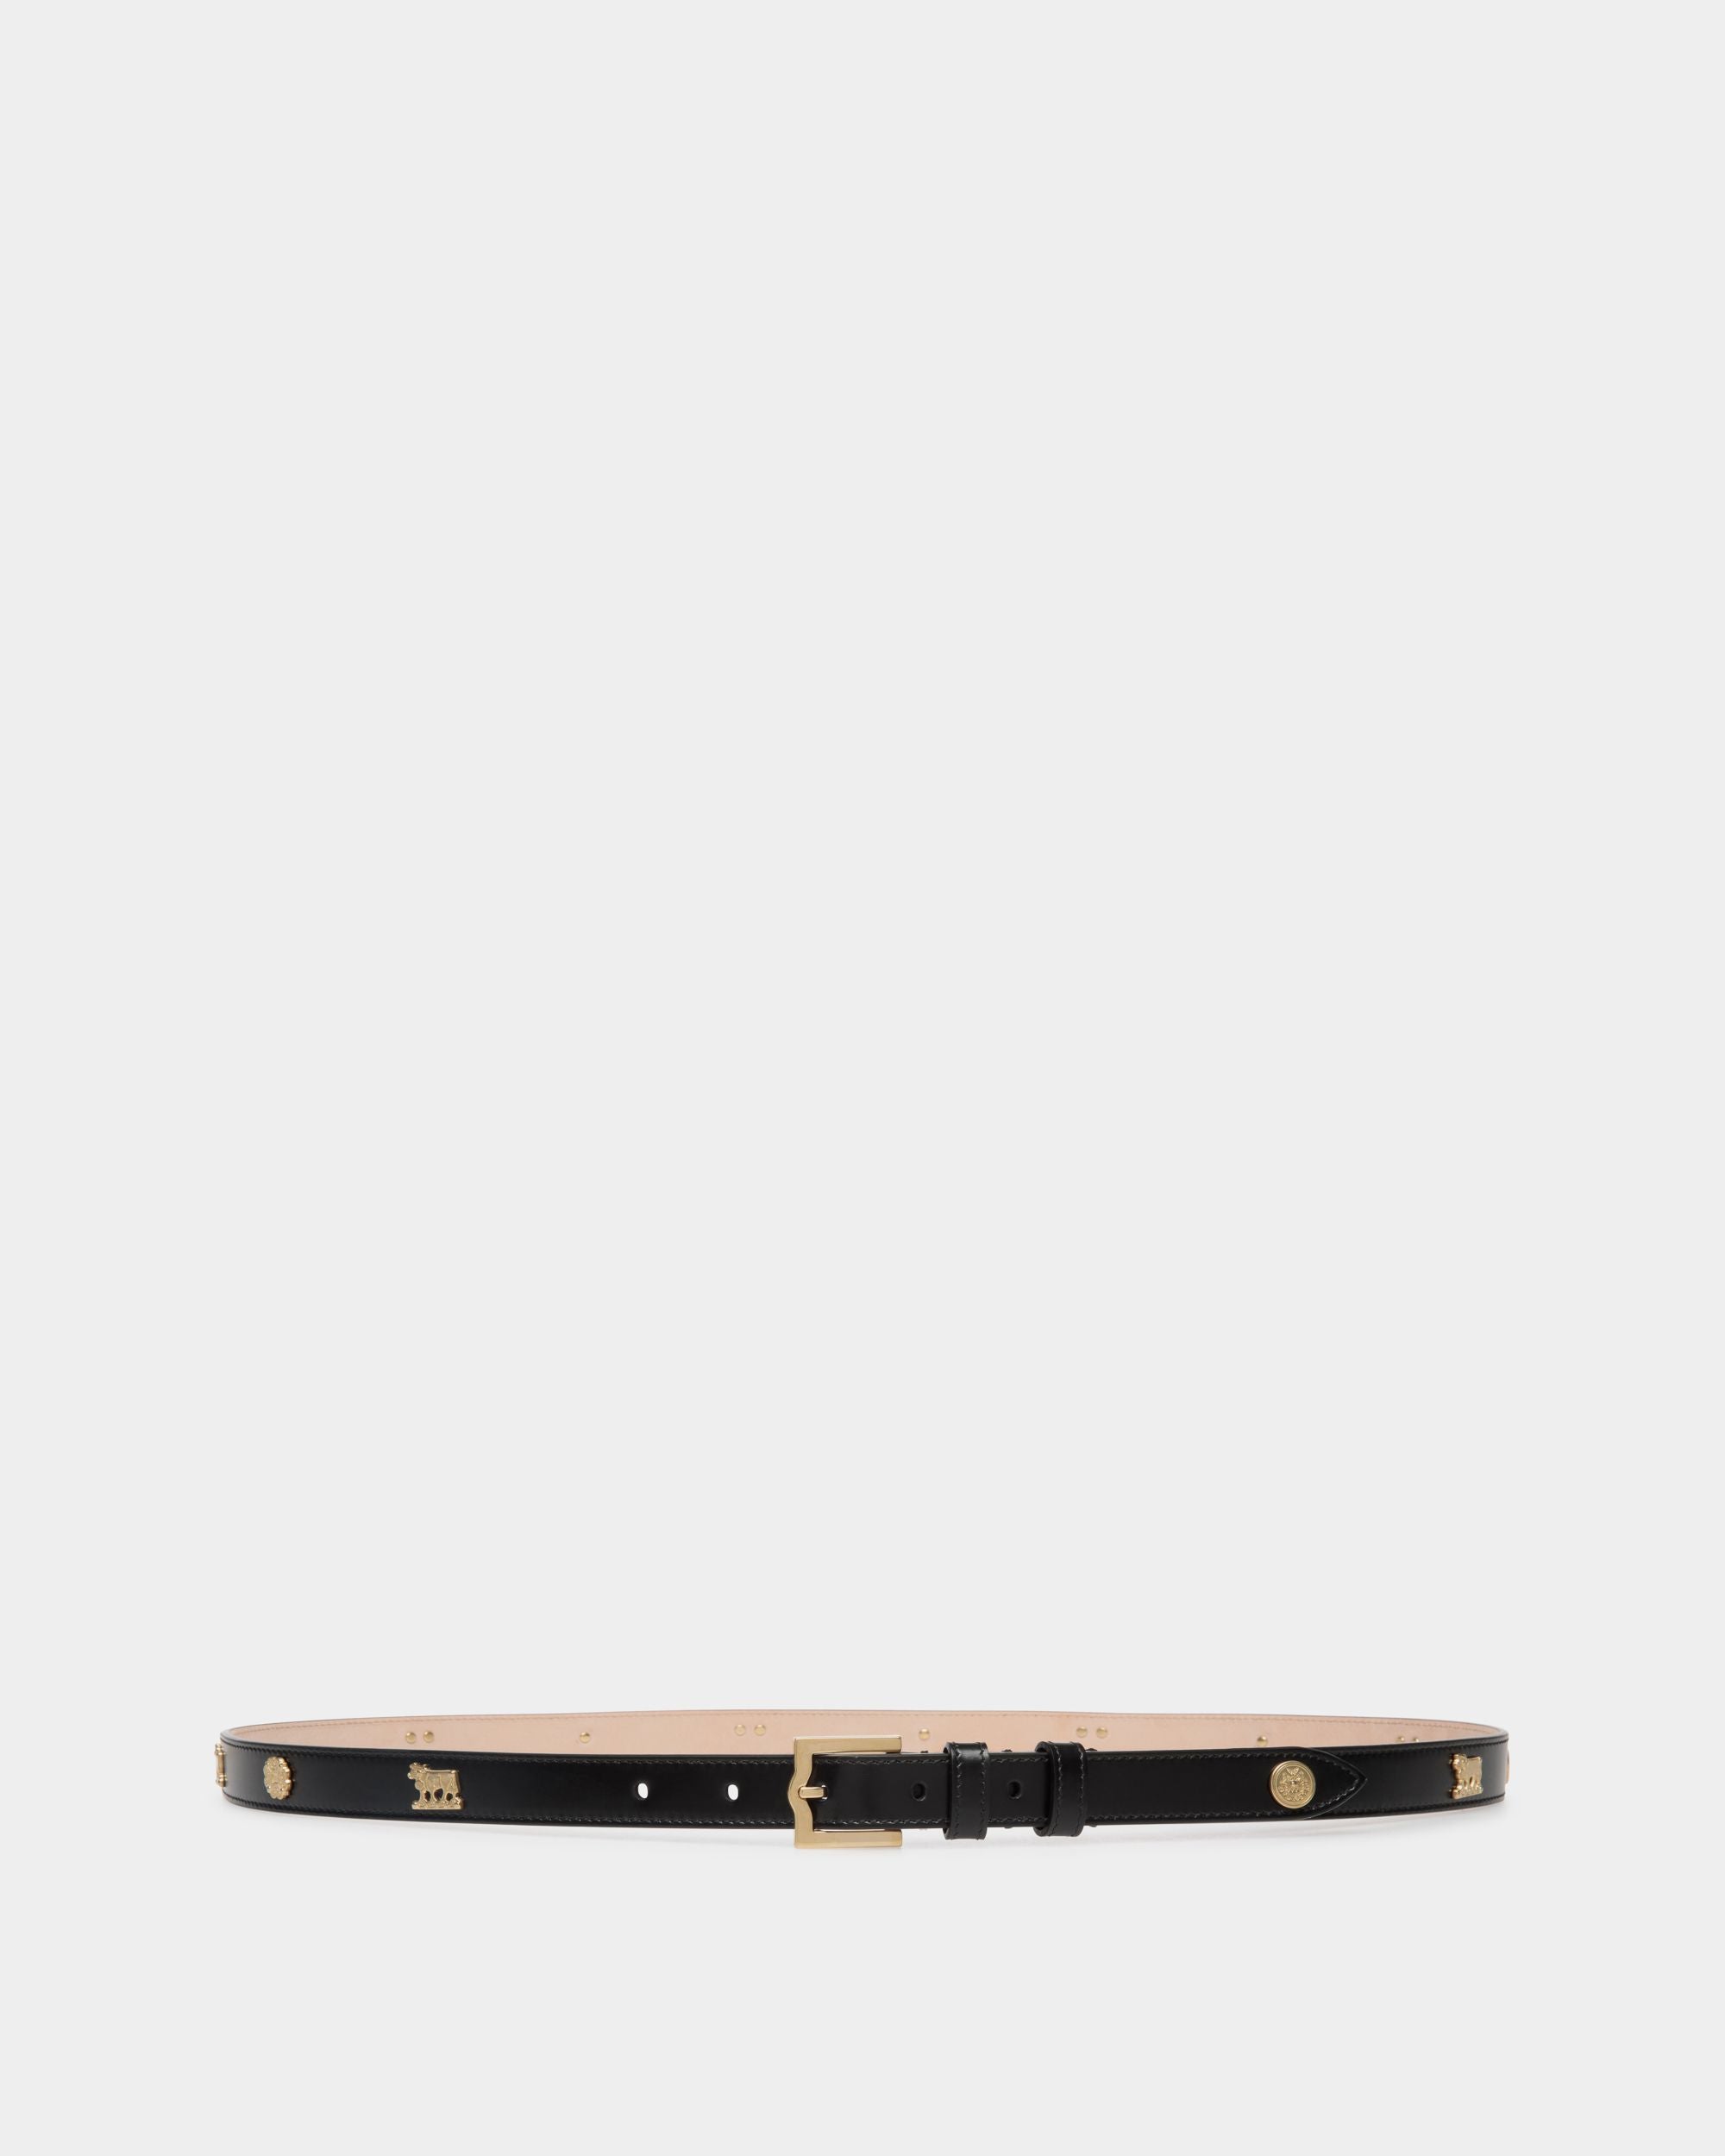 Emblem 105 cm | Cintura da donna in pelle spazzolata nera | Bally | Still Life Fronte